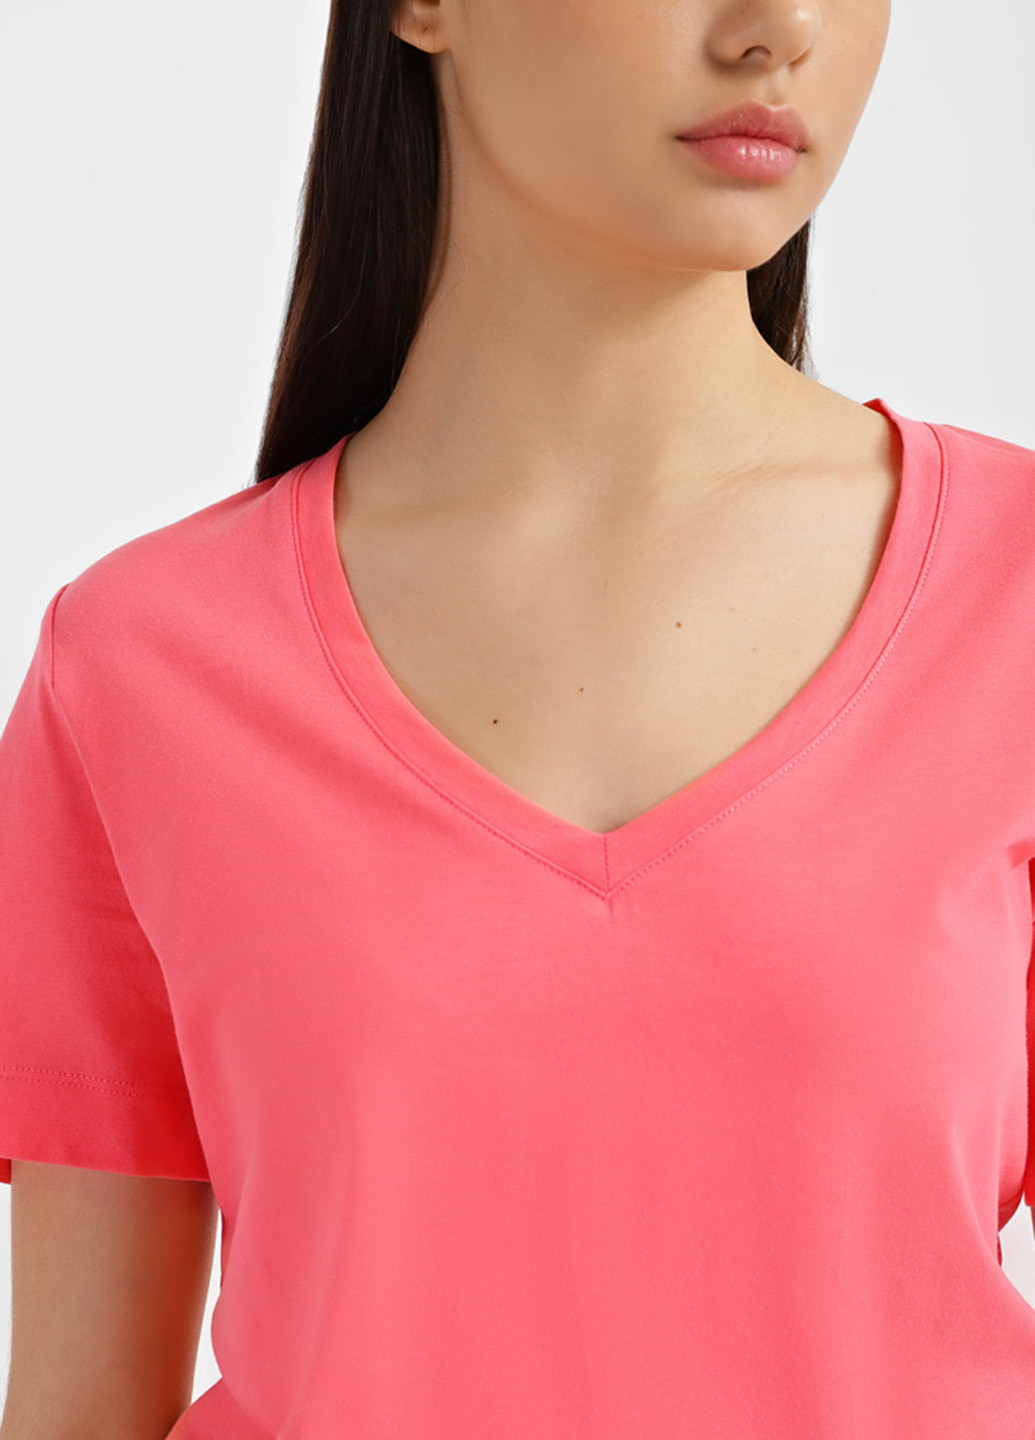 Кислотно-рожева літня футболка Promin